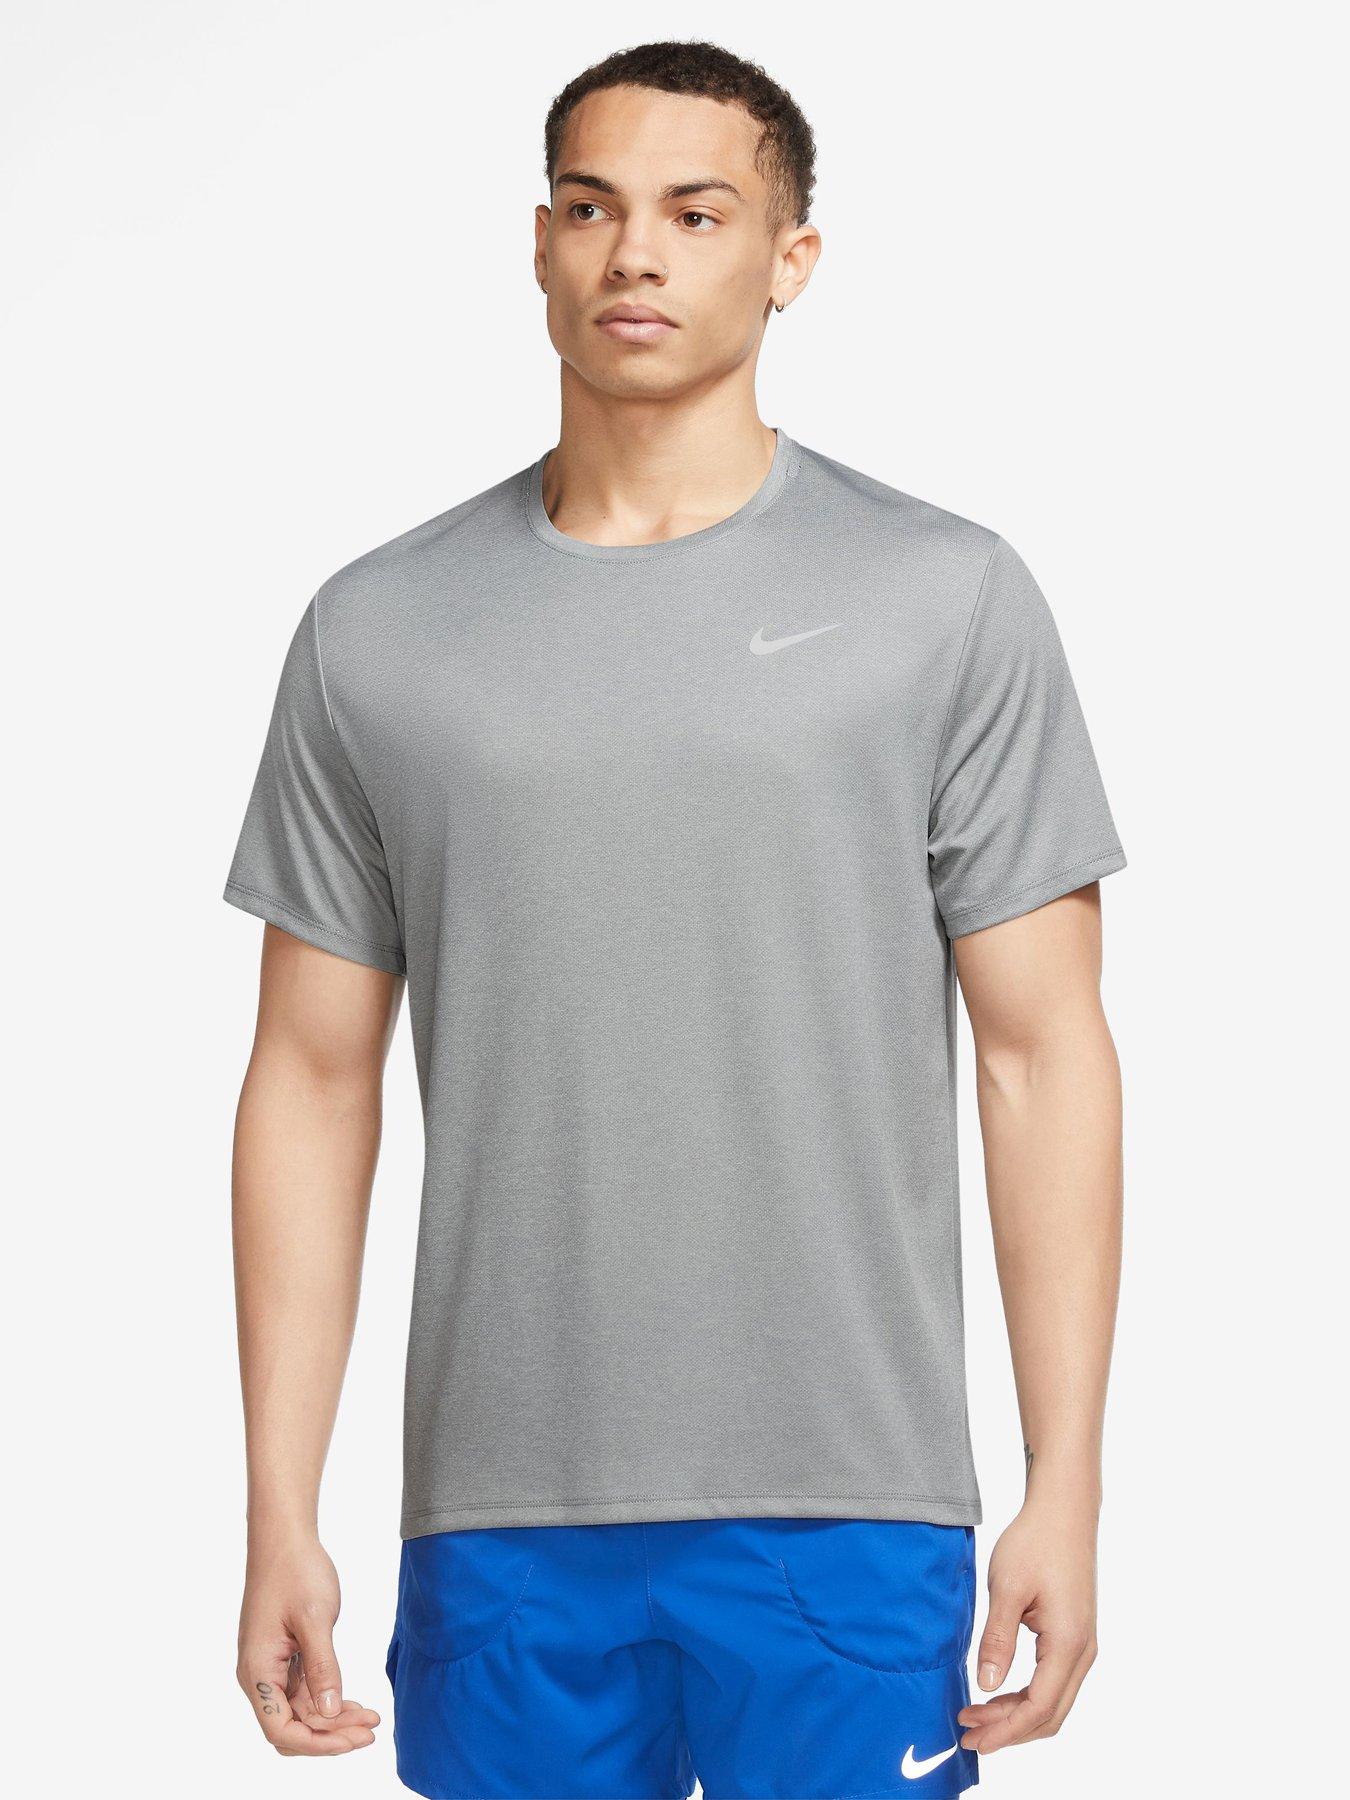  Nike Mens Legend Dri Fit Sleeveless T Shirt (Small, Navy) :  Clothing, Shoes & Jewelry